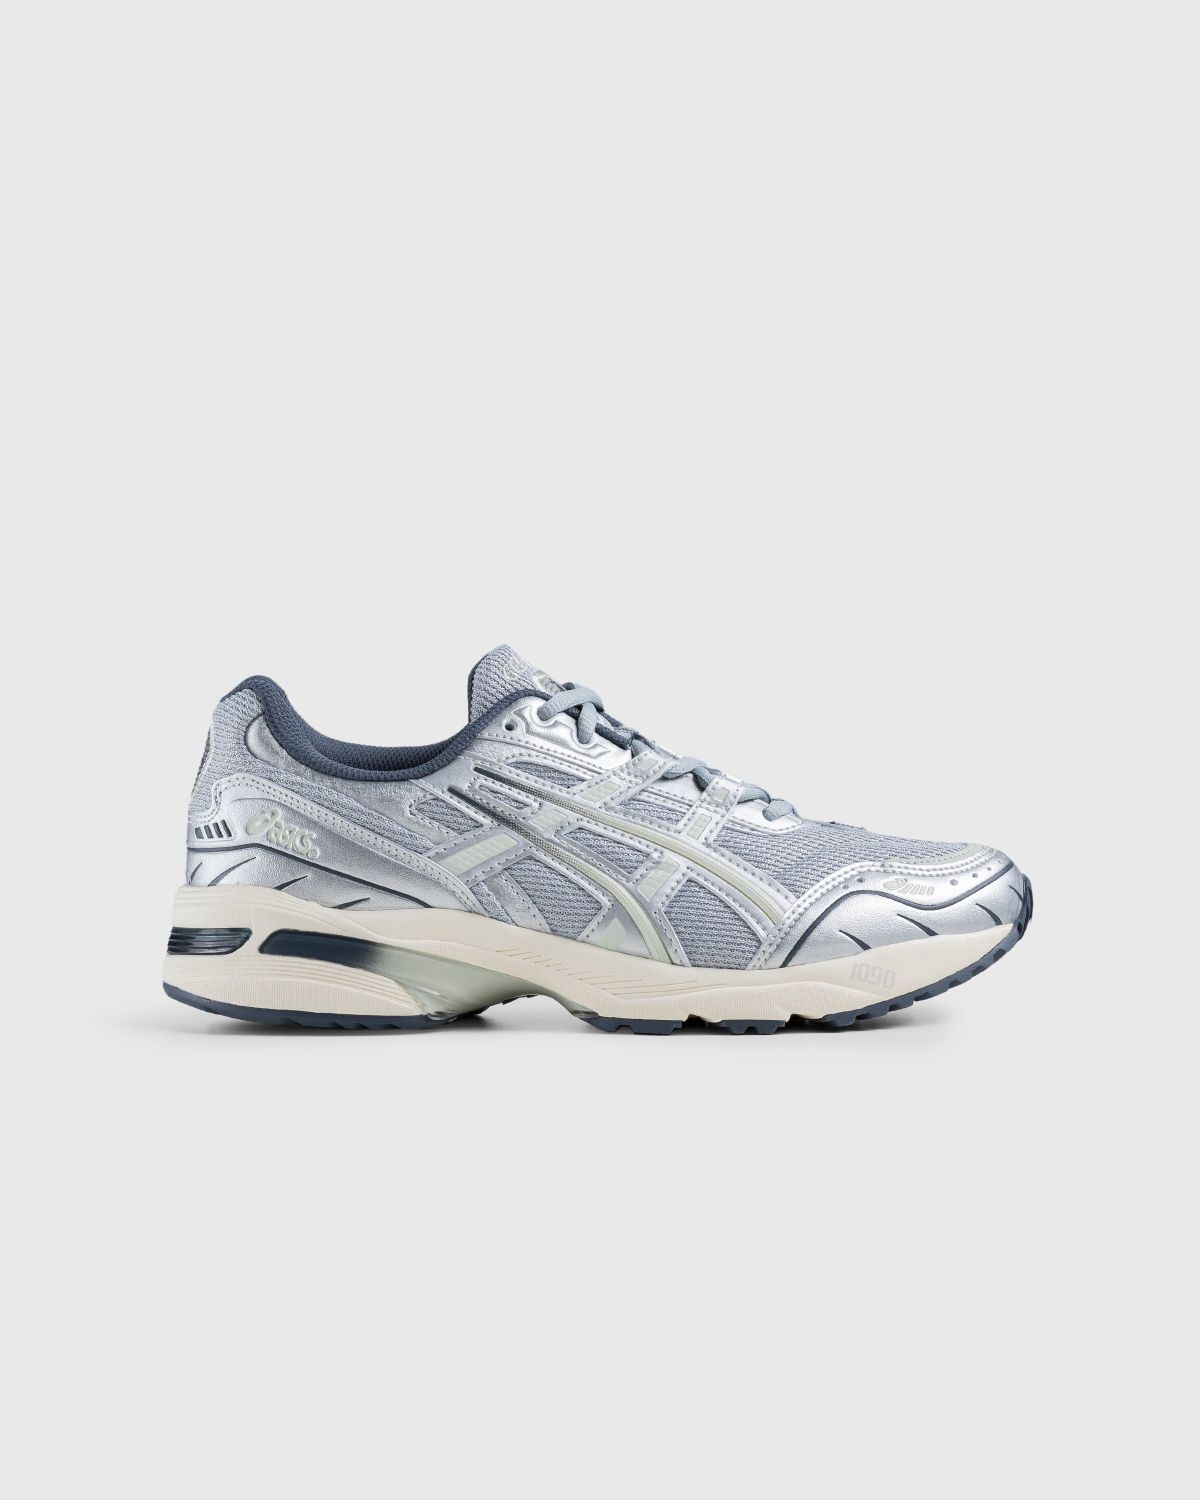 asics – GEL-1090 Piedmont Gray/Tarmac - Sneakers - Silver - Image 1